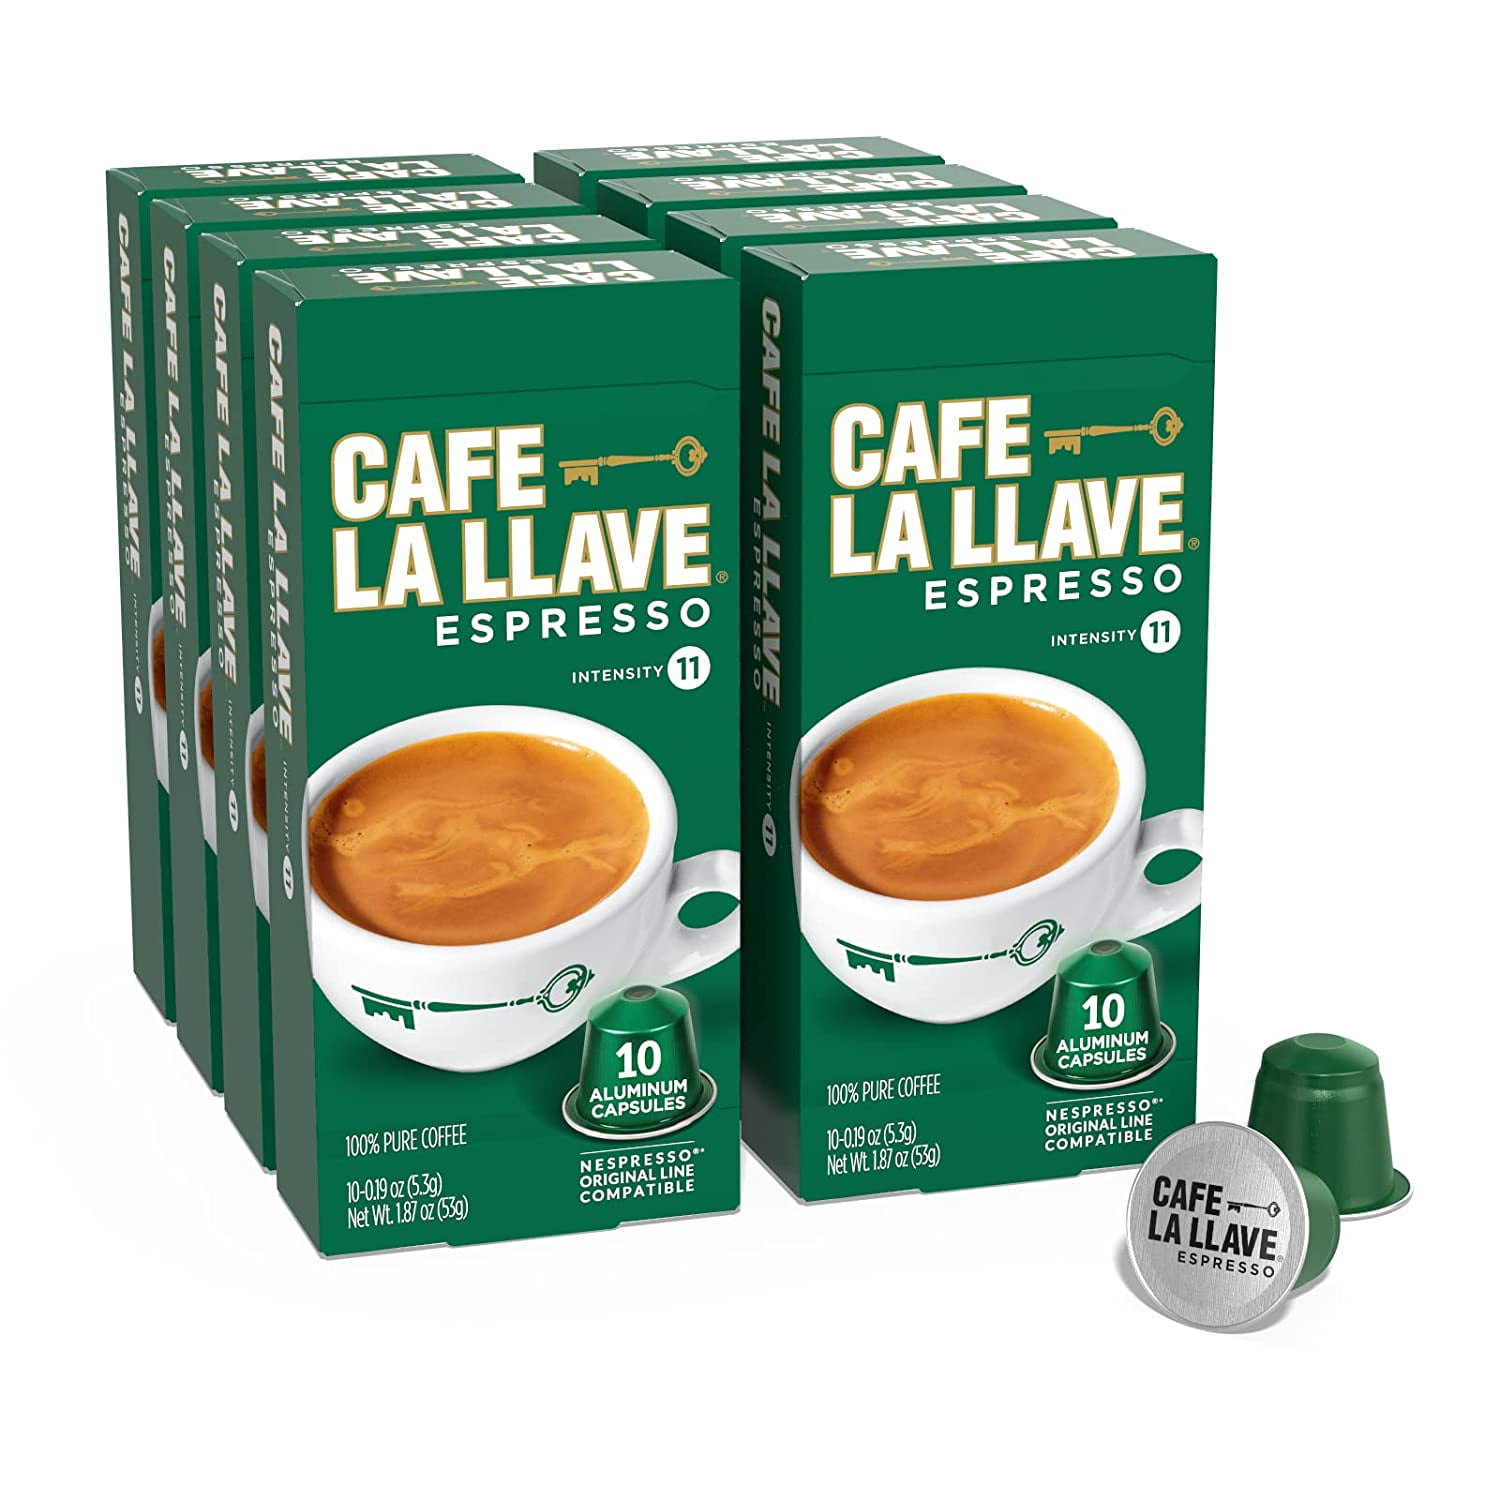 Cafe La Llave Espresso Capsules, Intensity 11-Recylable Coffee Compatible with Nespresso Machines - Walmart.com